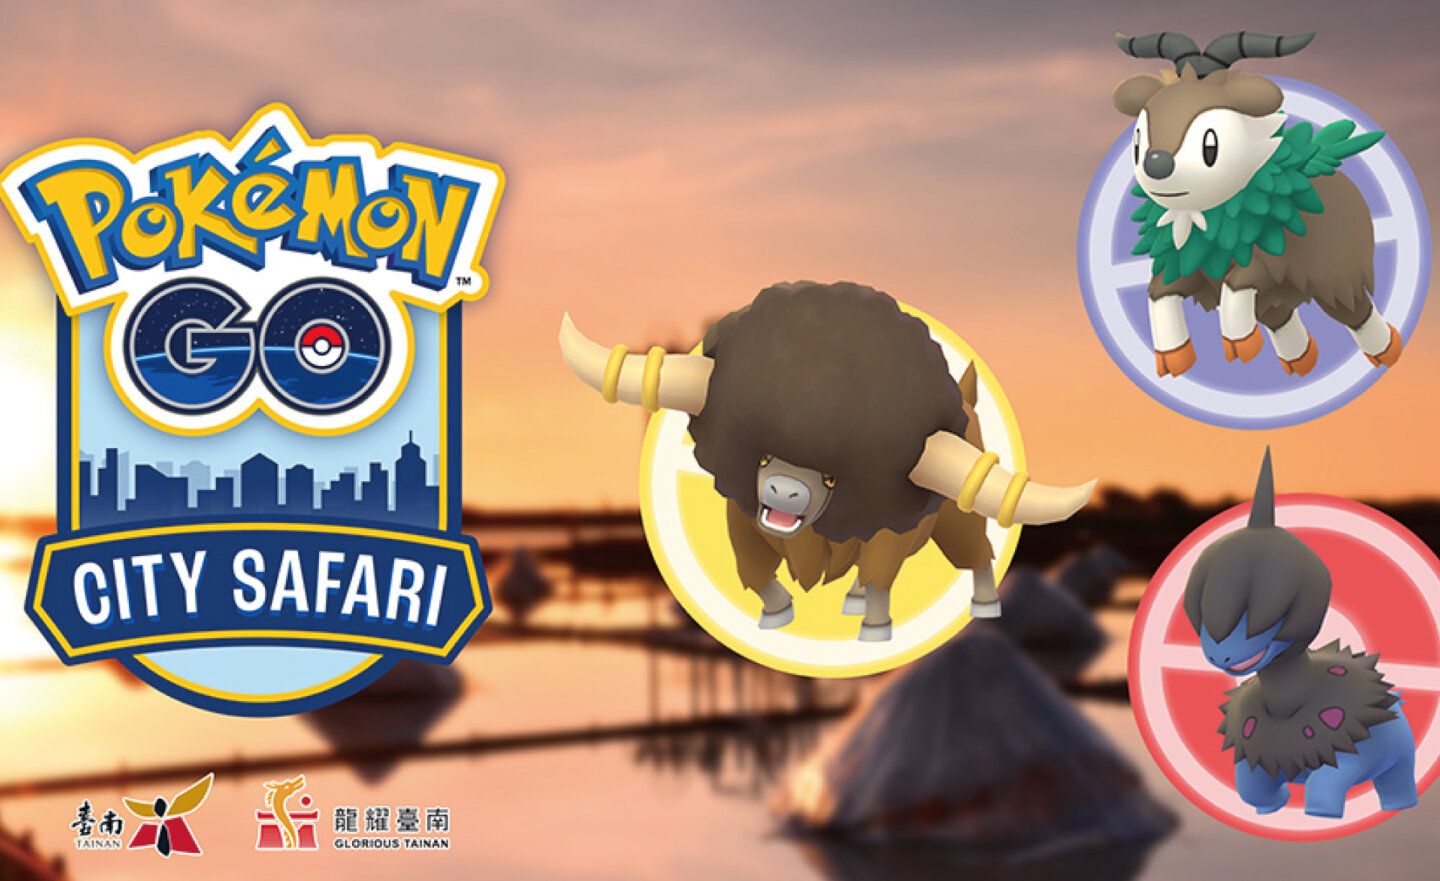 「Pokémon GO City Safari」3/9 起跑，探索30條「官方路線」深度體驗台南